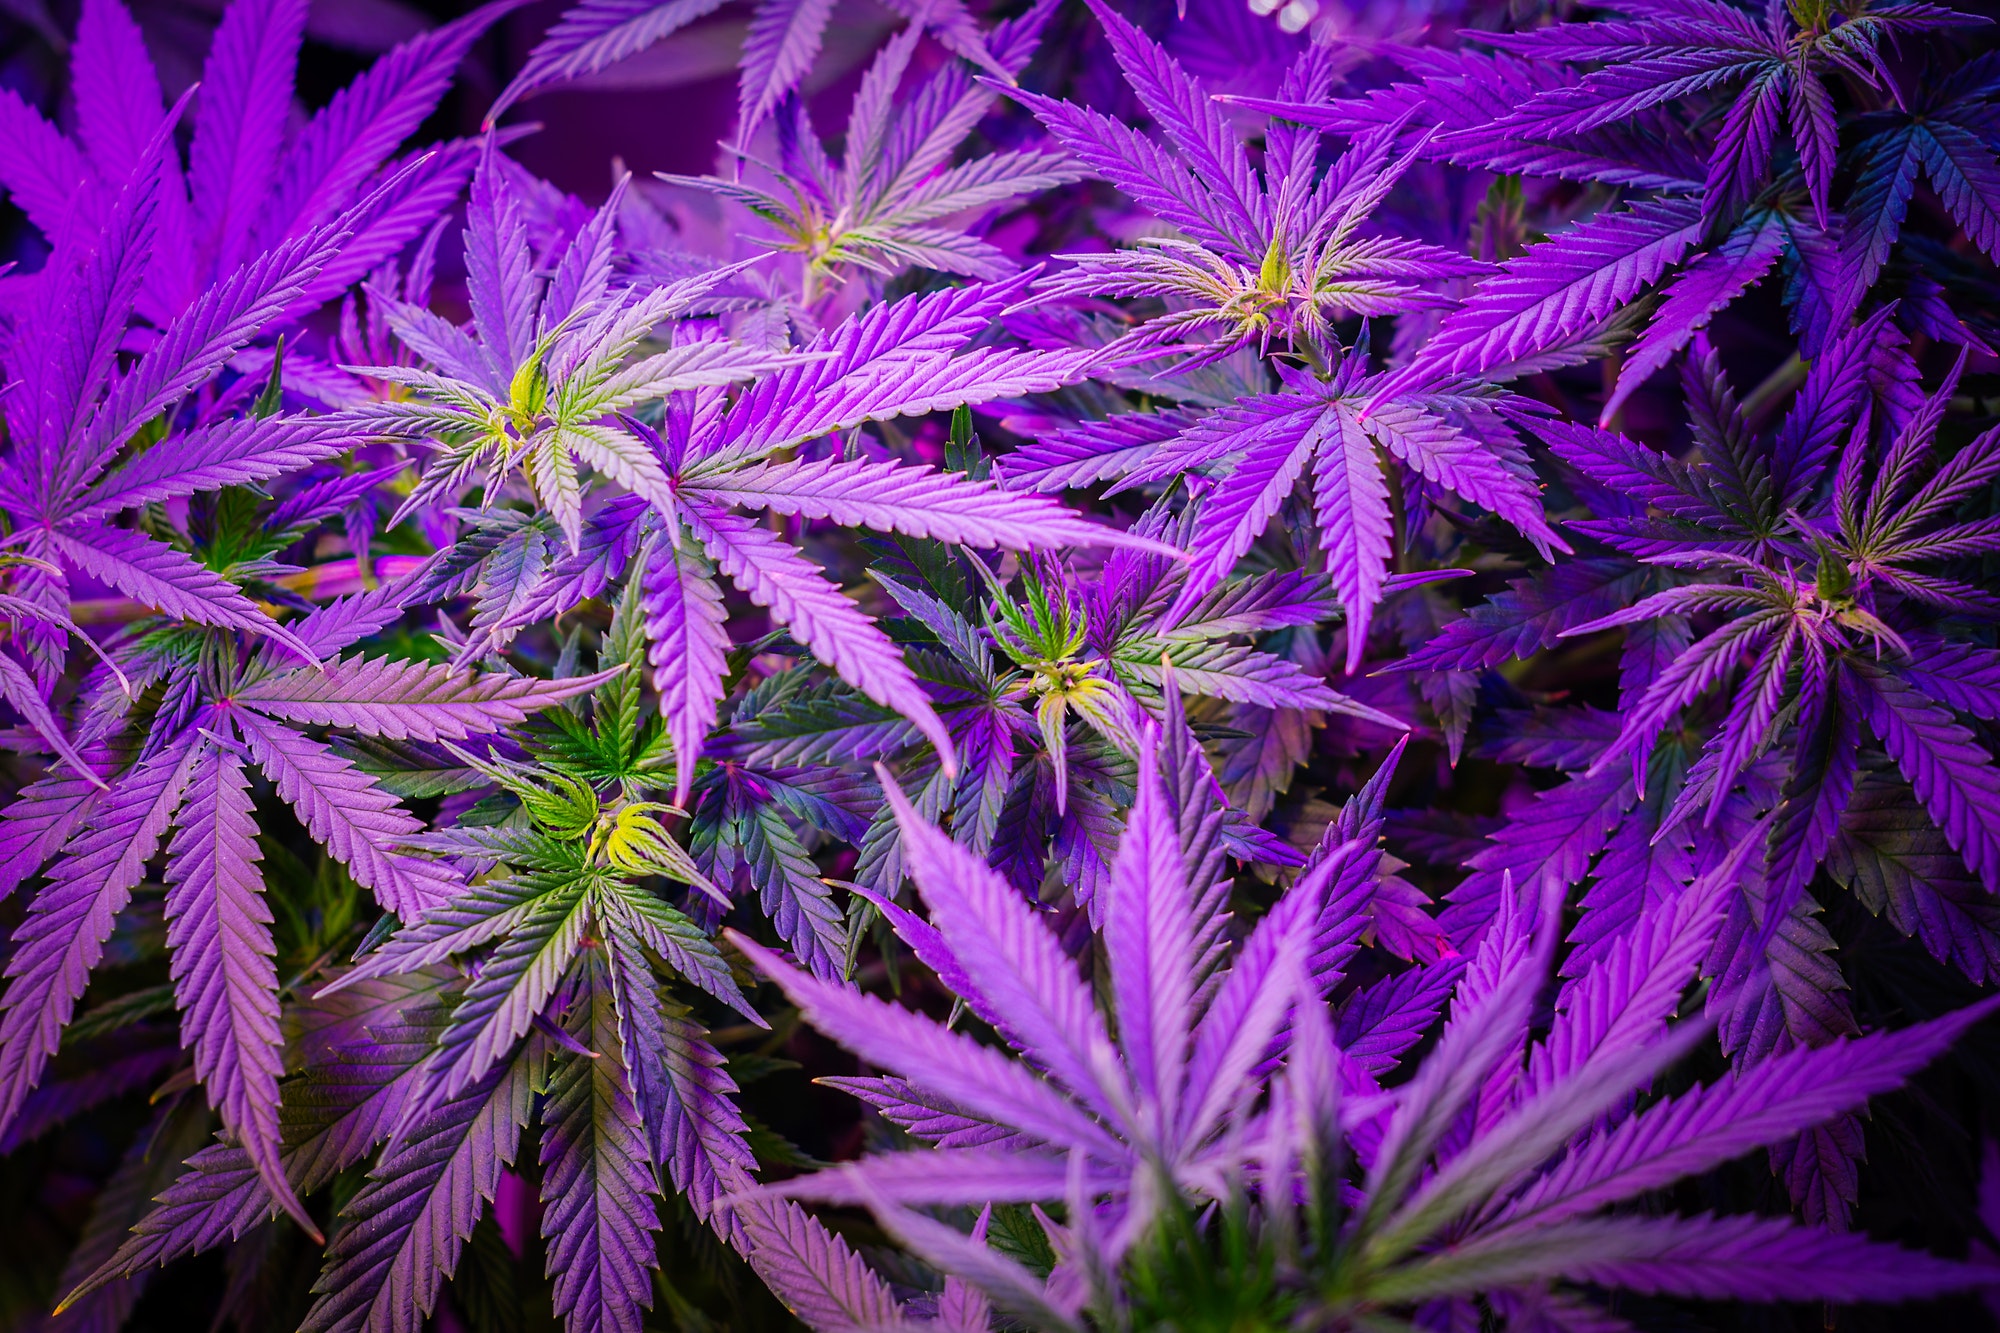 Purple kush marijuana cannabis leafs cultivating and growing medical marijuana